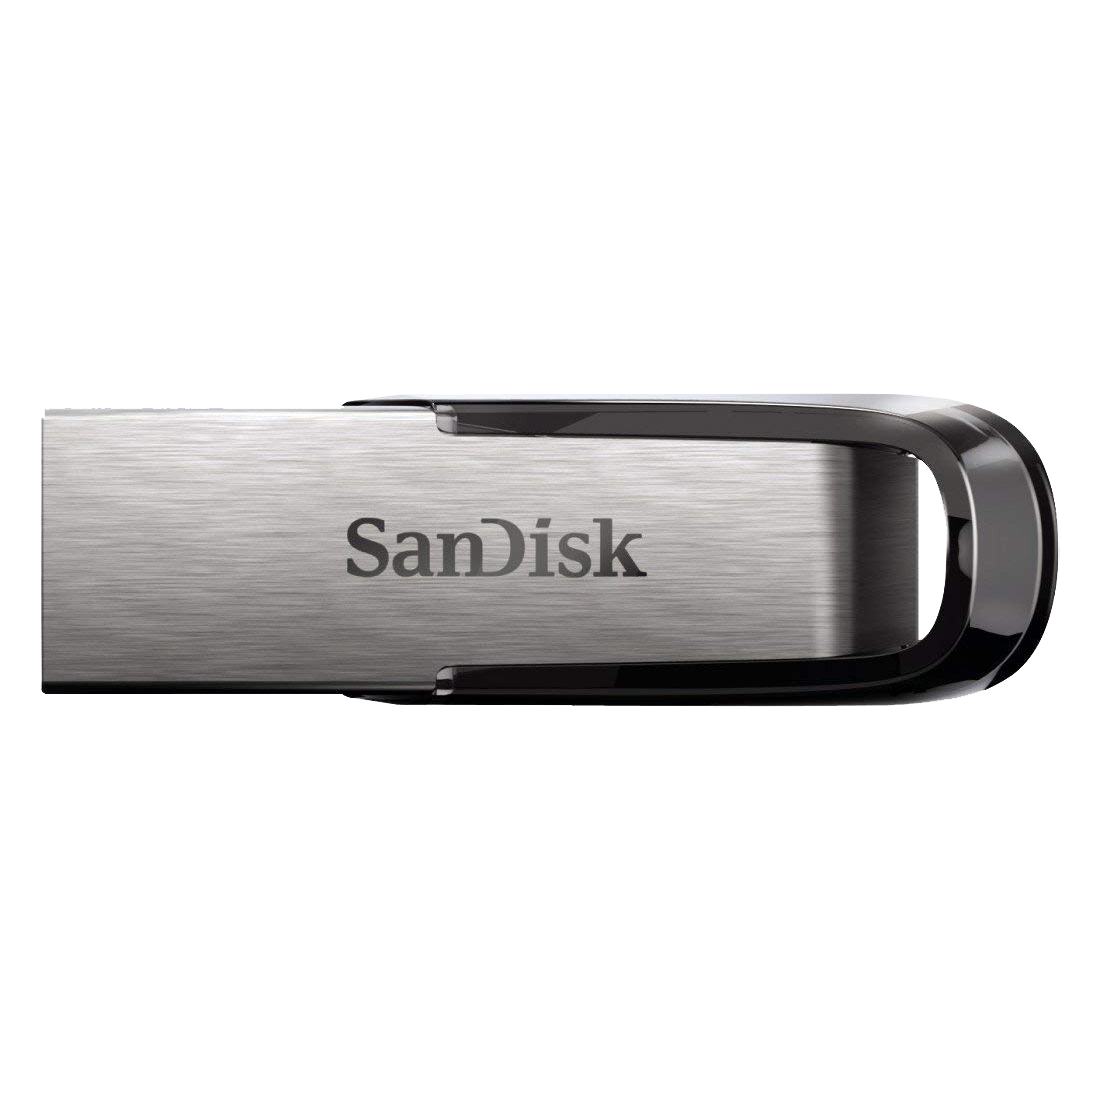 Sandisk Ultra Fair 64GB Pen Drive (SDCZ73-064G-I35, Silver)